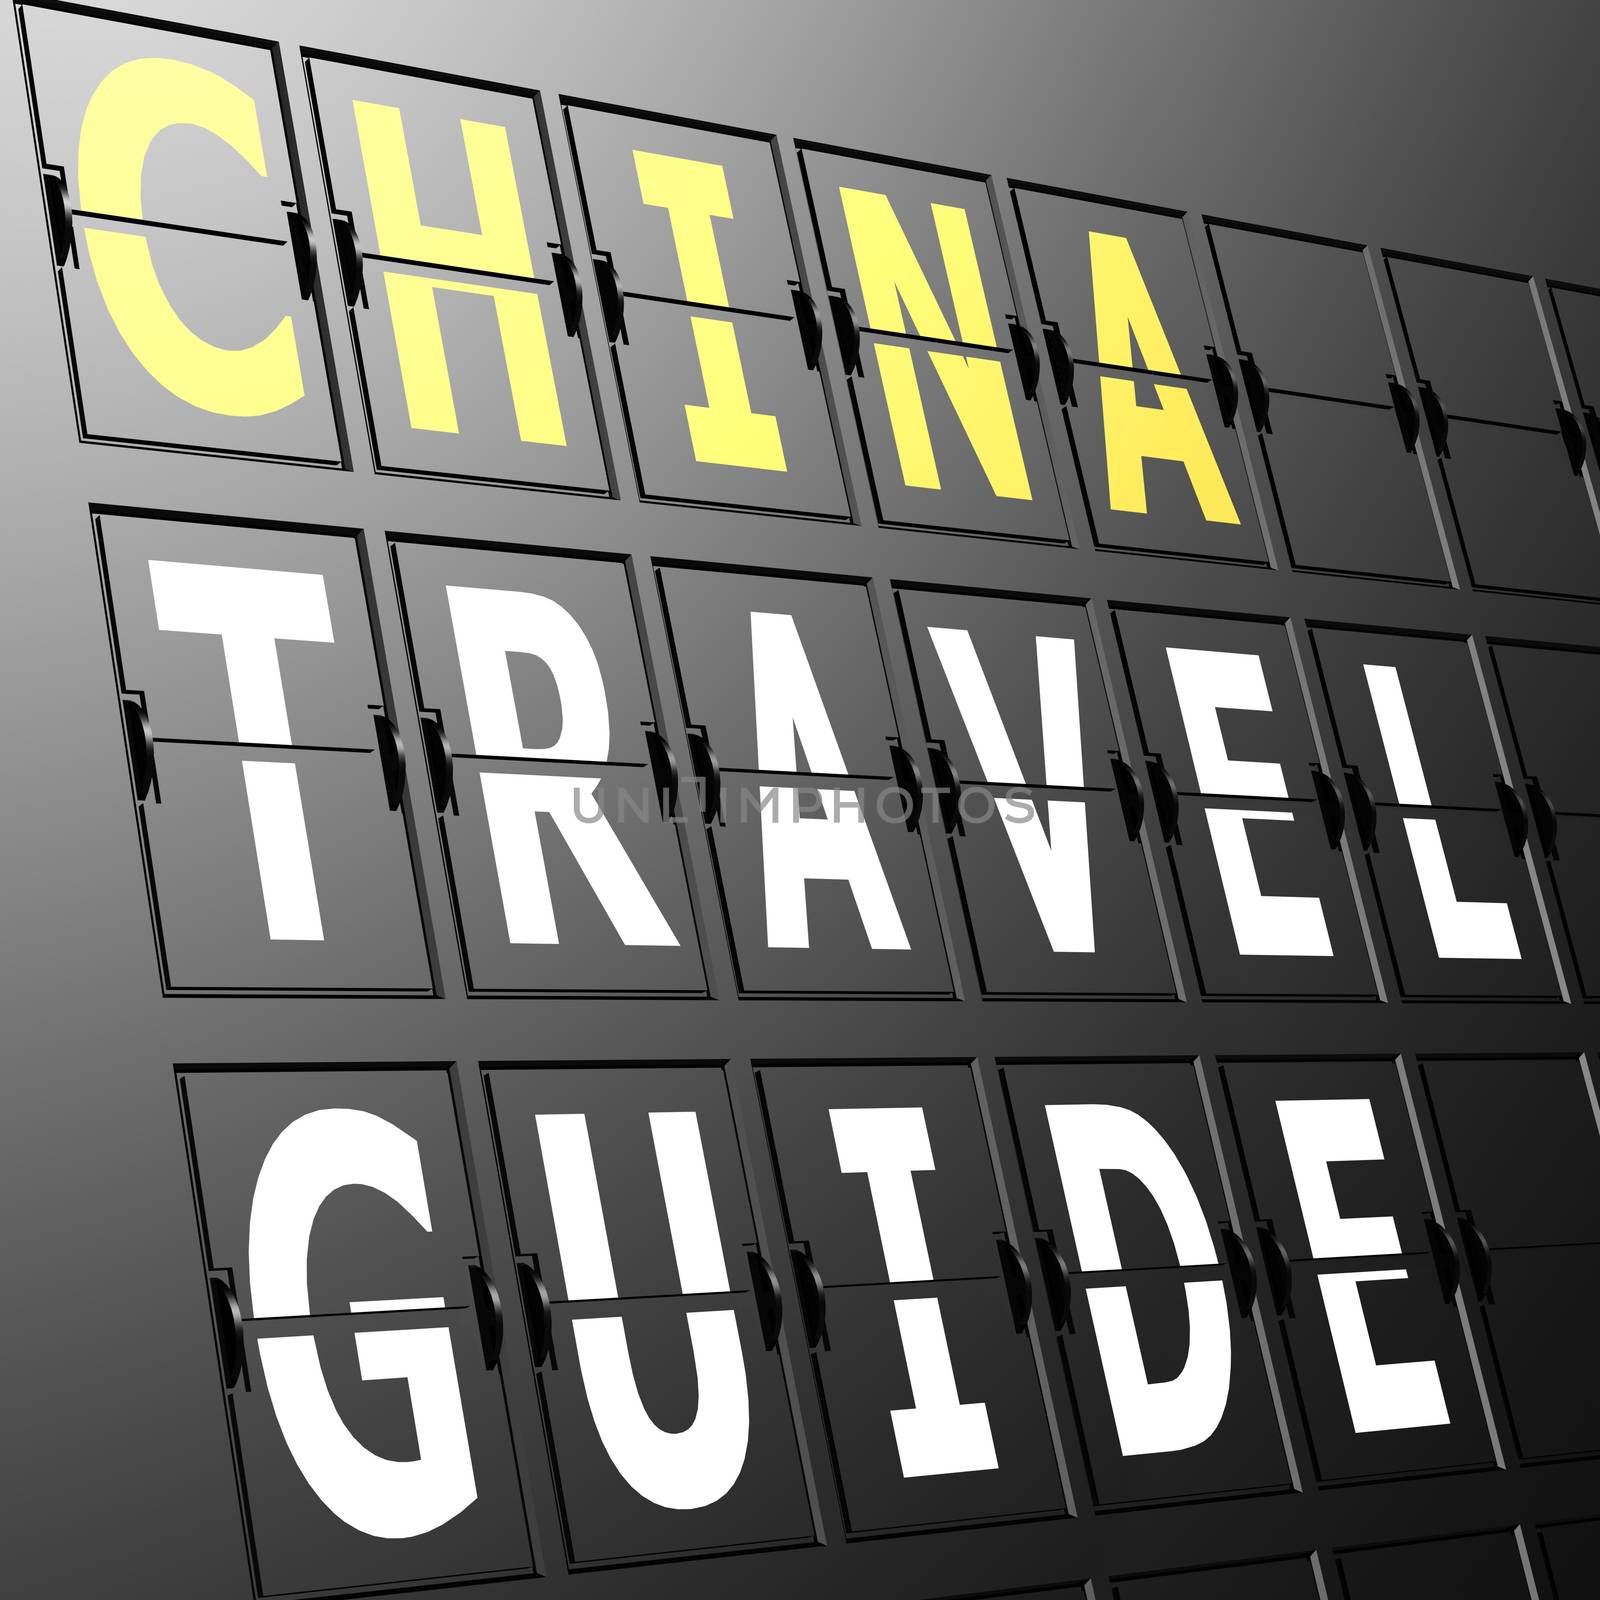 Airport display China travel guide by tang90246